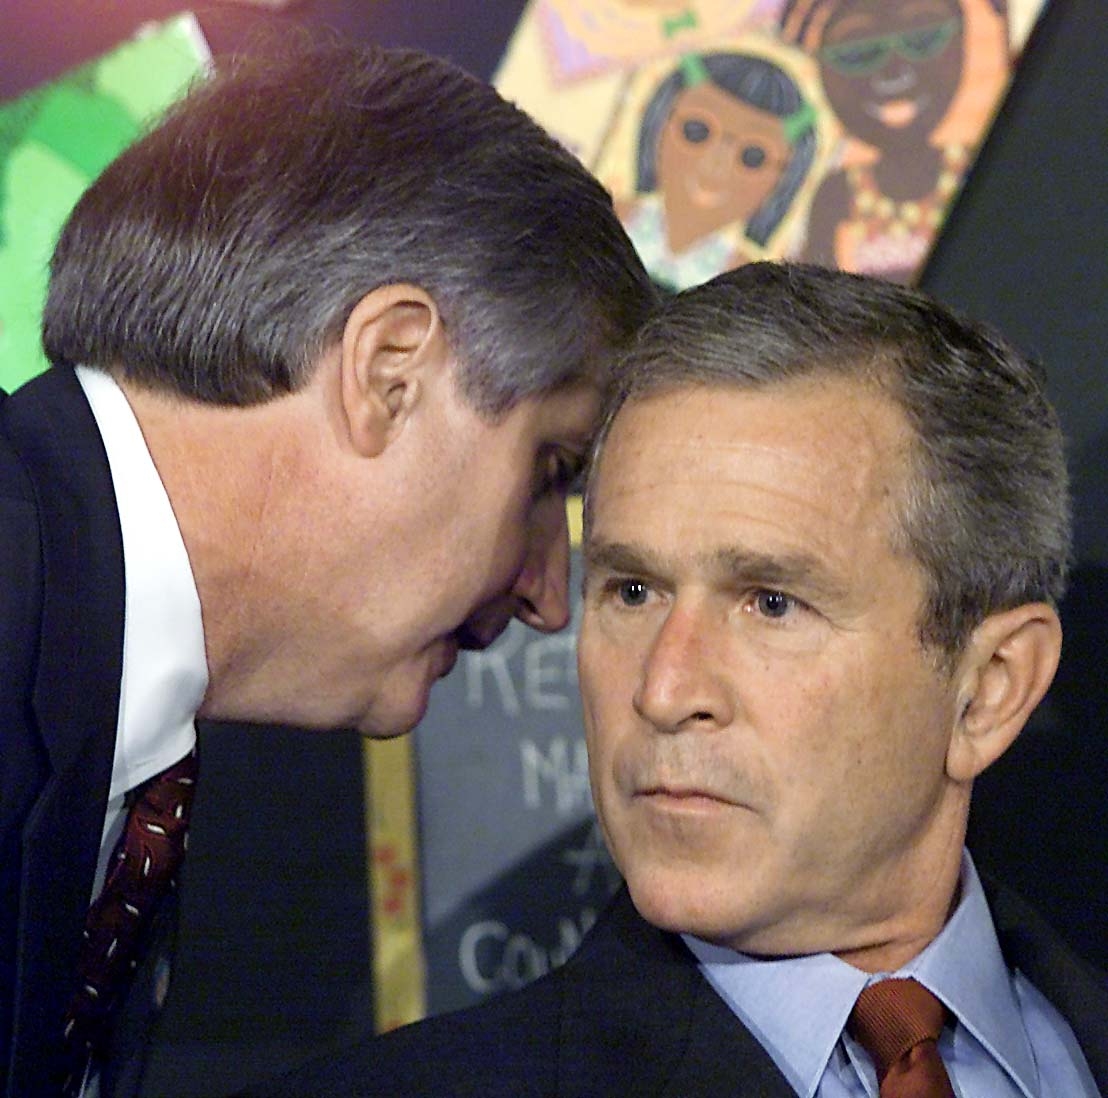 11 de setembro: o que disse Bush assim que soube dos ataques?